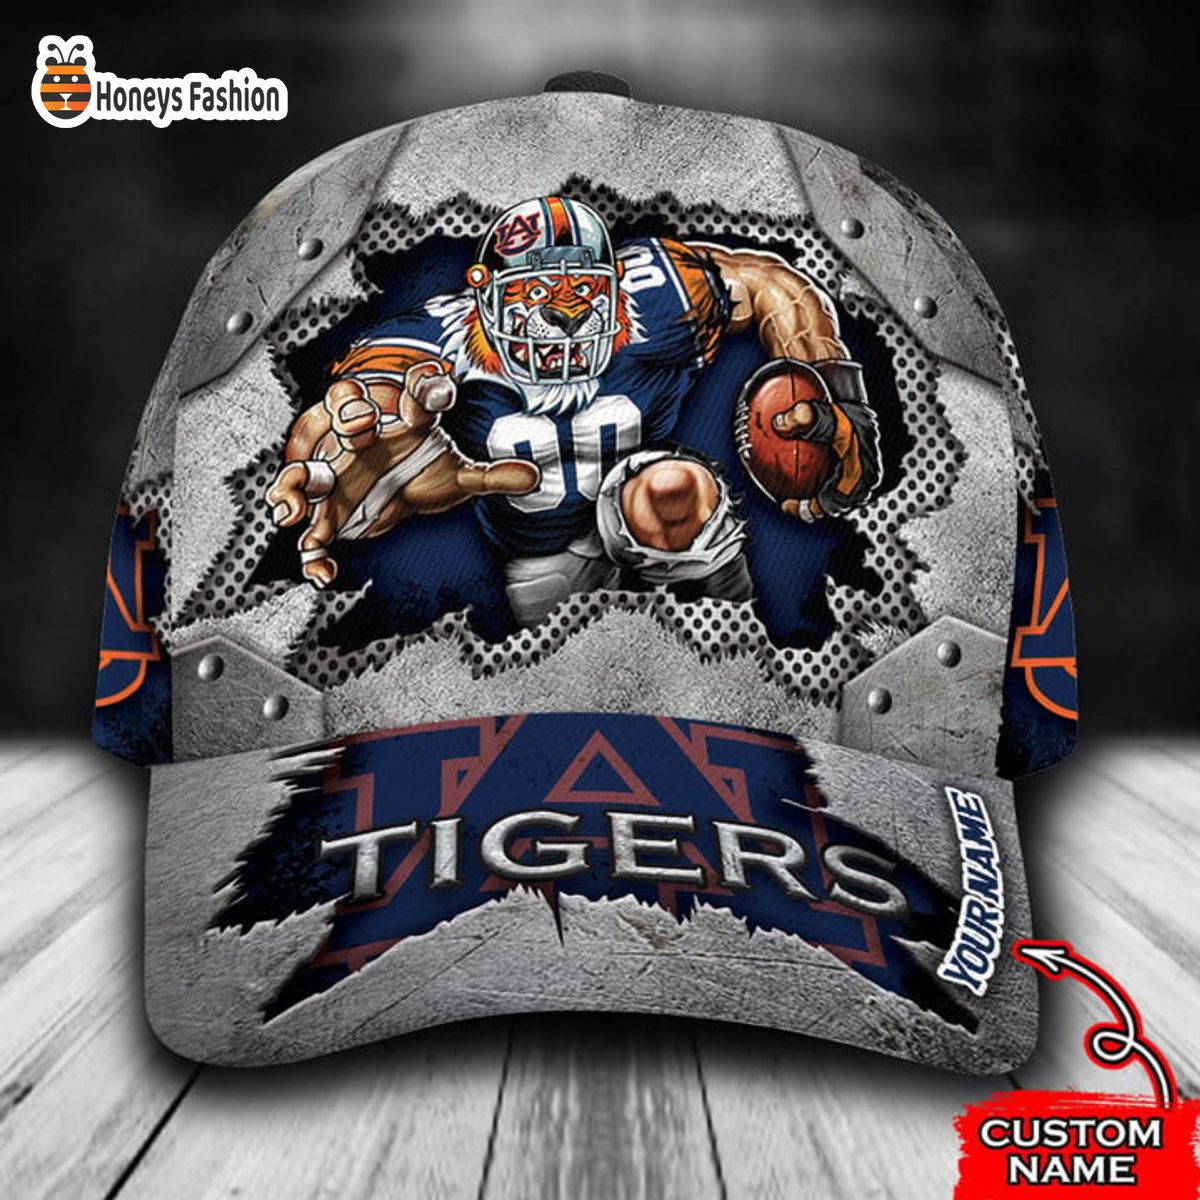 Auburn Tigers mascot custom name classic cap